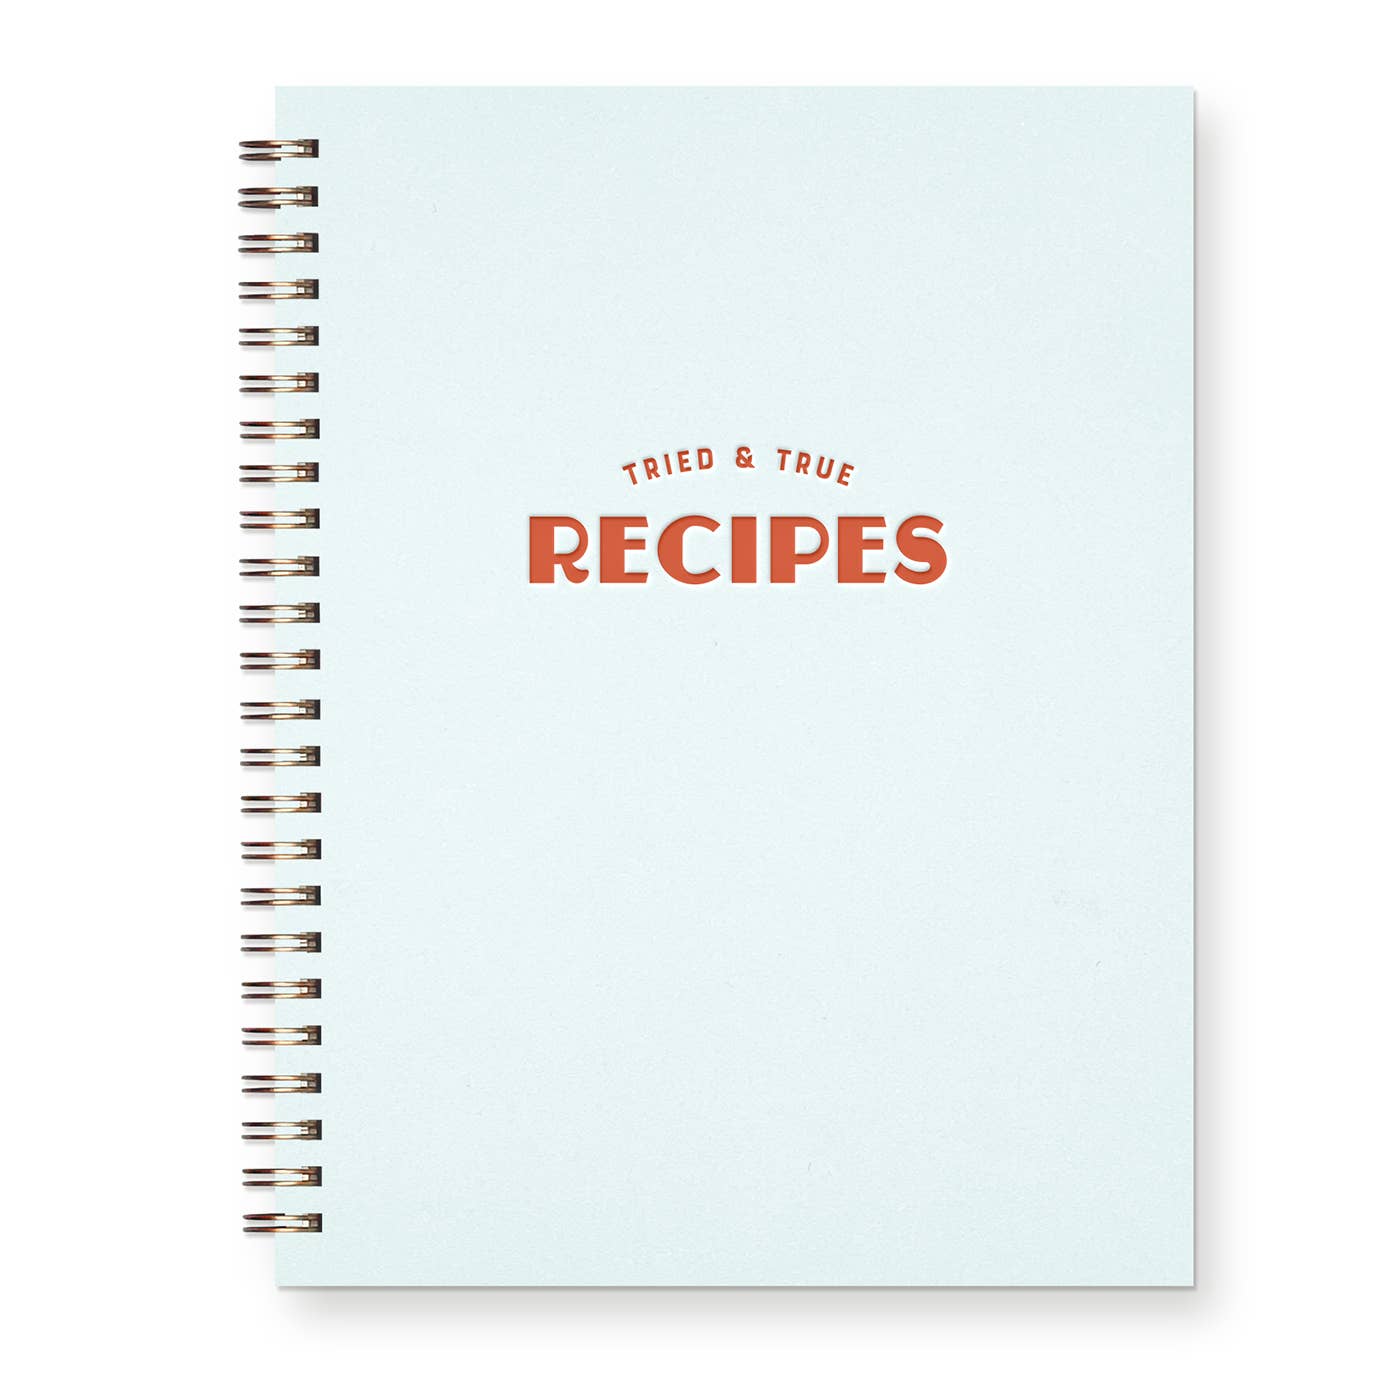 Tried & True Recipes Book